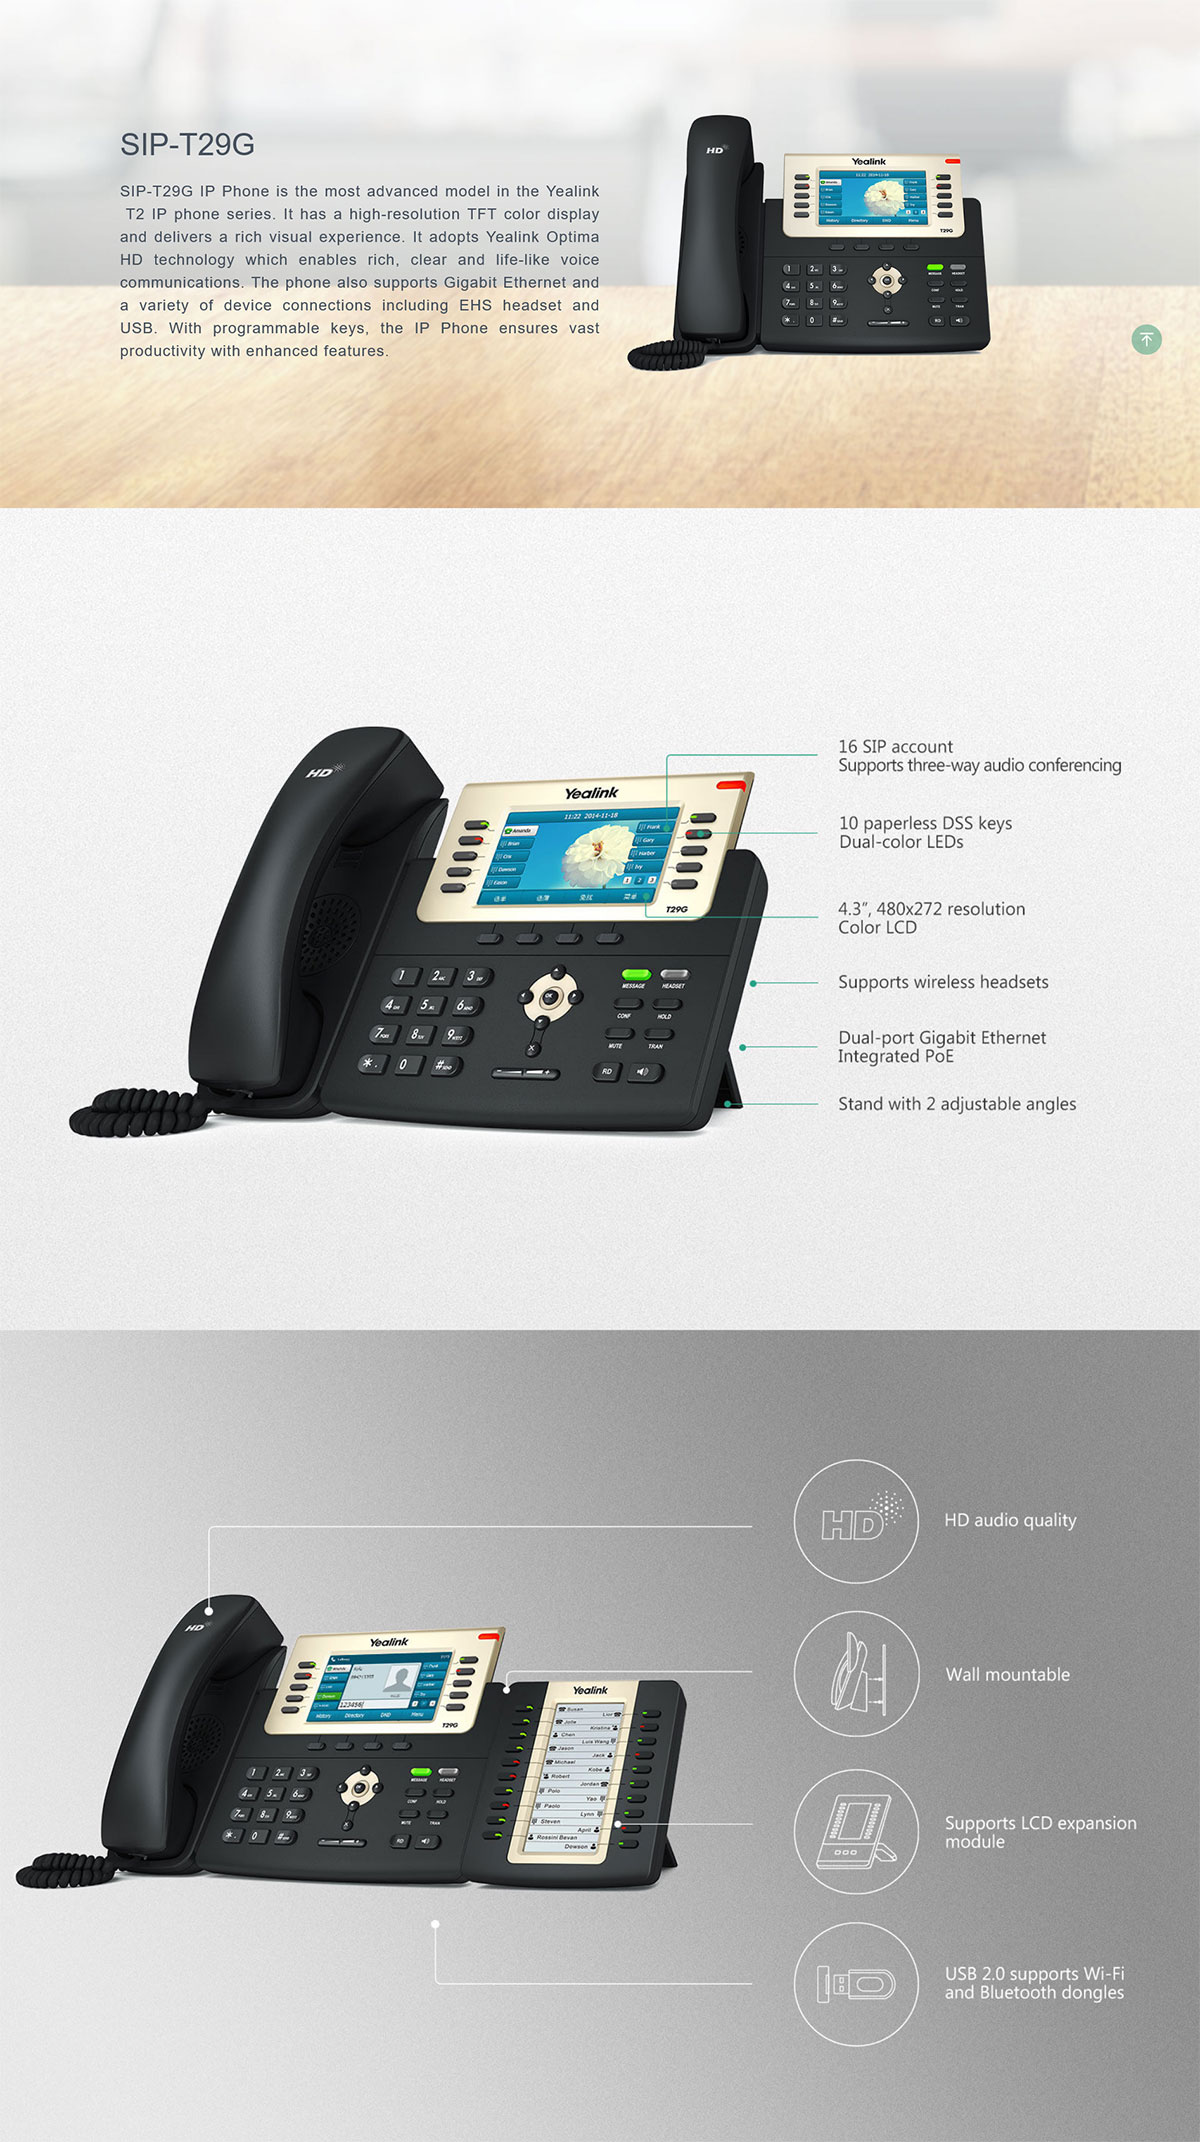 Yealink SIP-T29G 6 Line Colour IP Phone Details